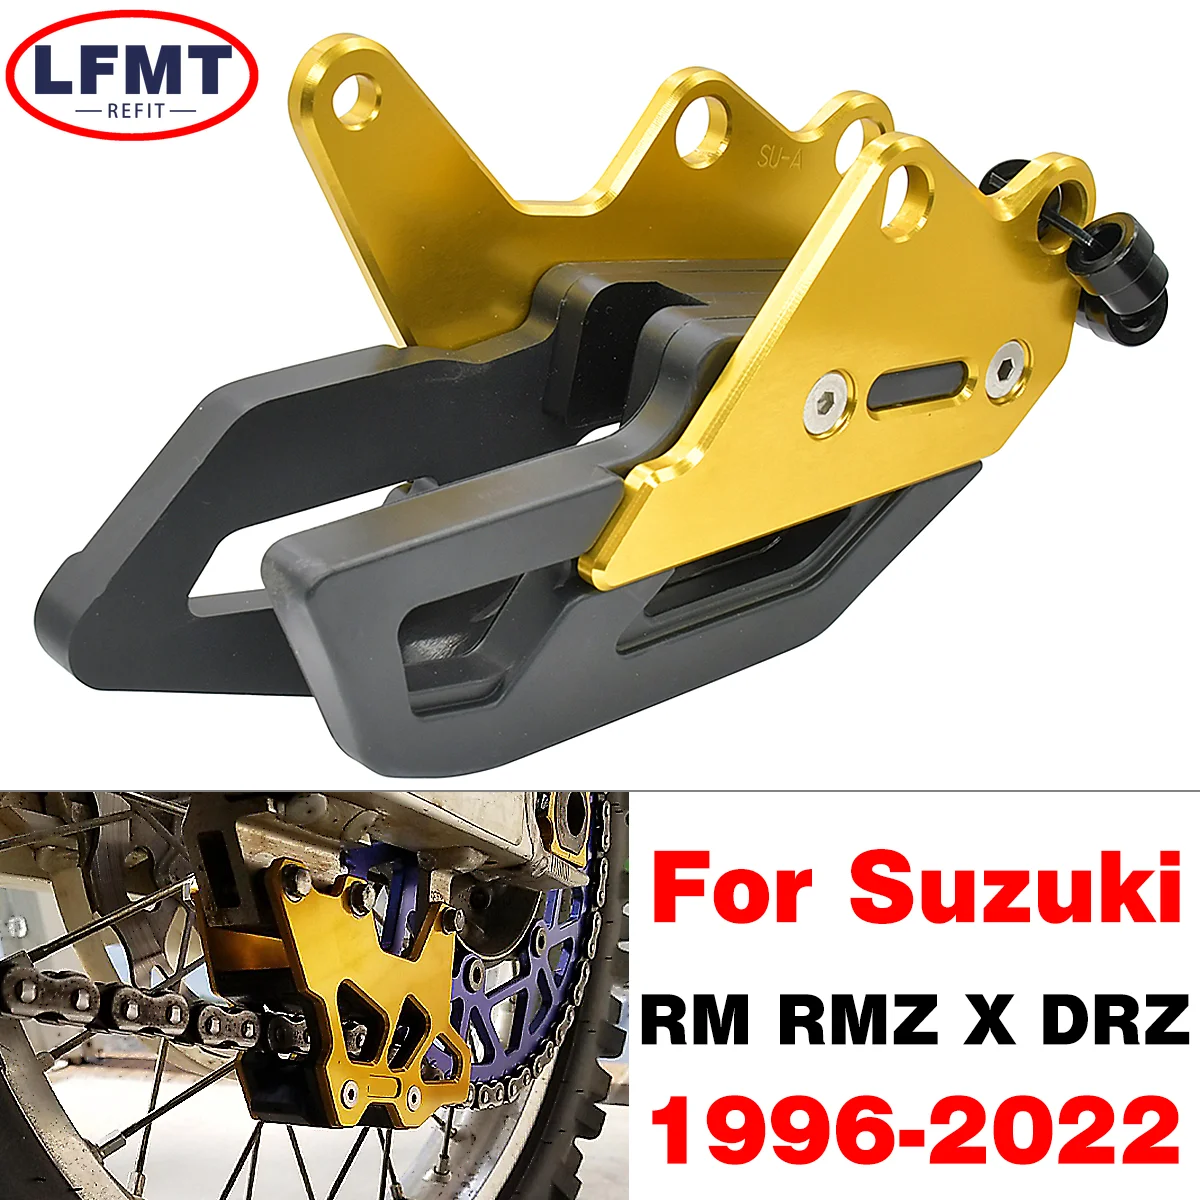 

For Suzuki RM125 RM250 RMZ250 RMZ450 RMX450Z DRZ250 DRZ400 DRZ400E DRZ400S DRZSM 1996-2022 Motorcycle CNC Chain Guide Guard